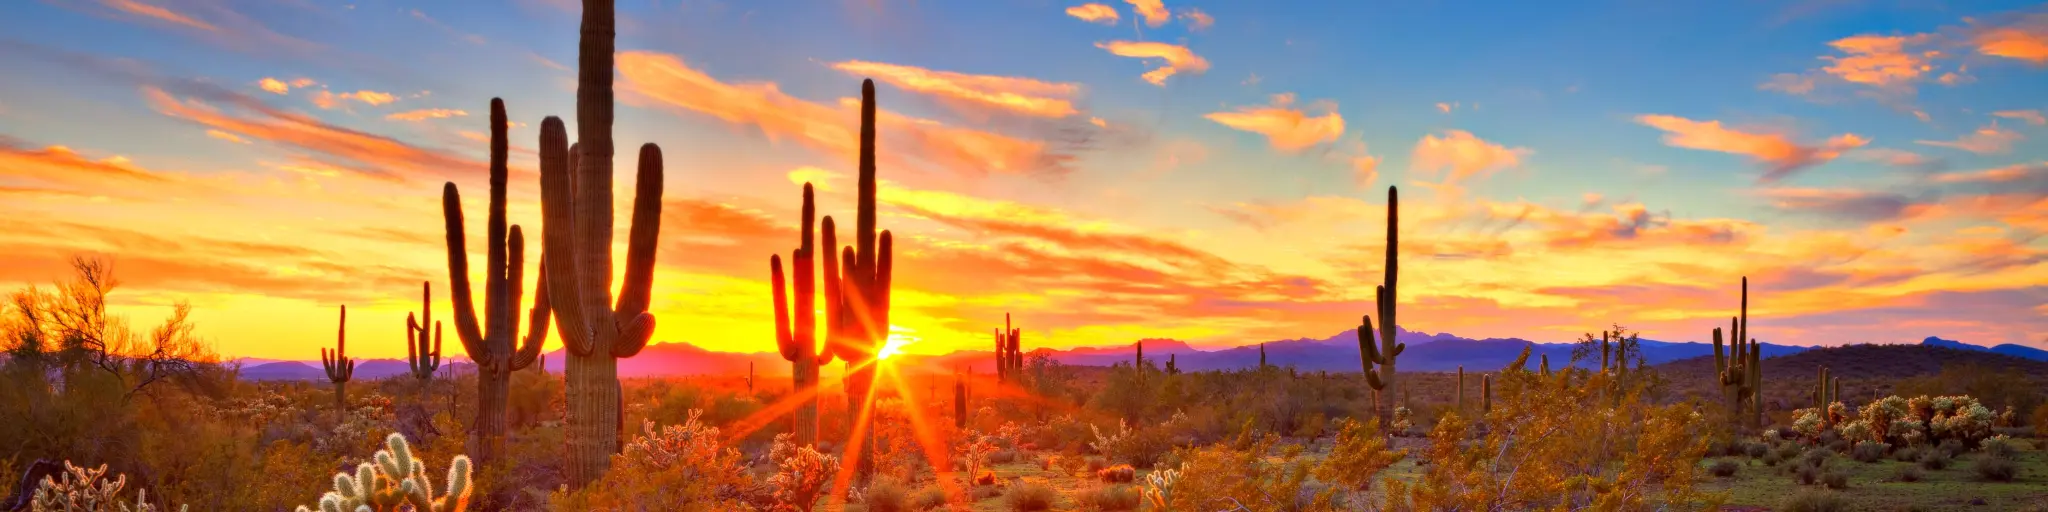 Sun setting between saguaros in the Sonoran Desert near Phoenix